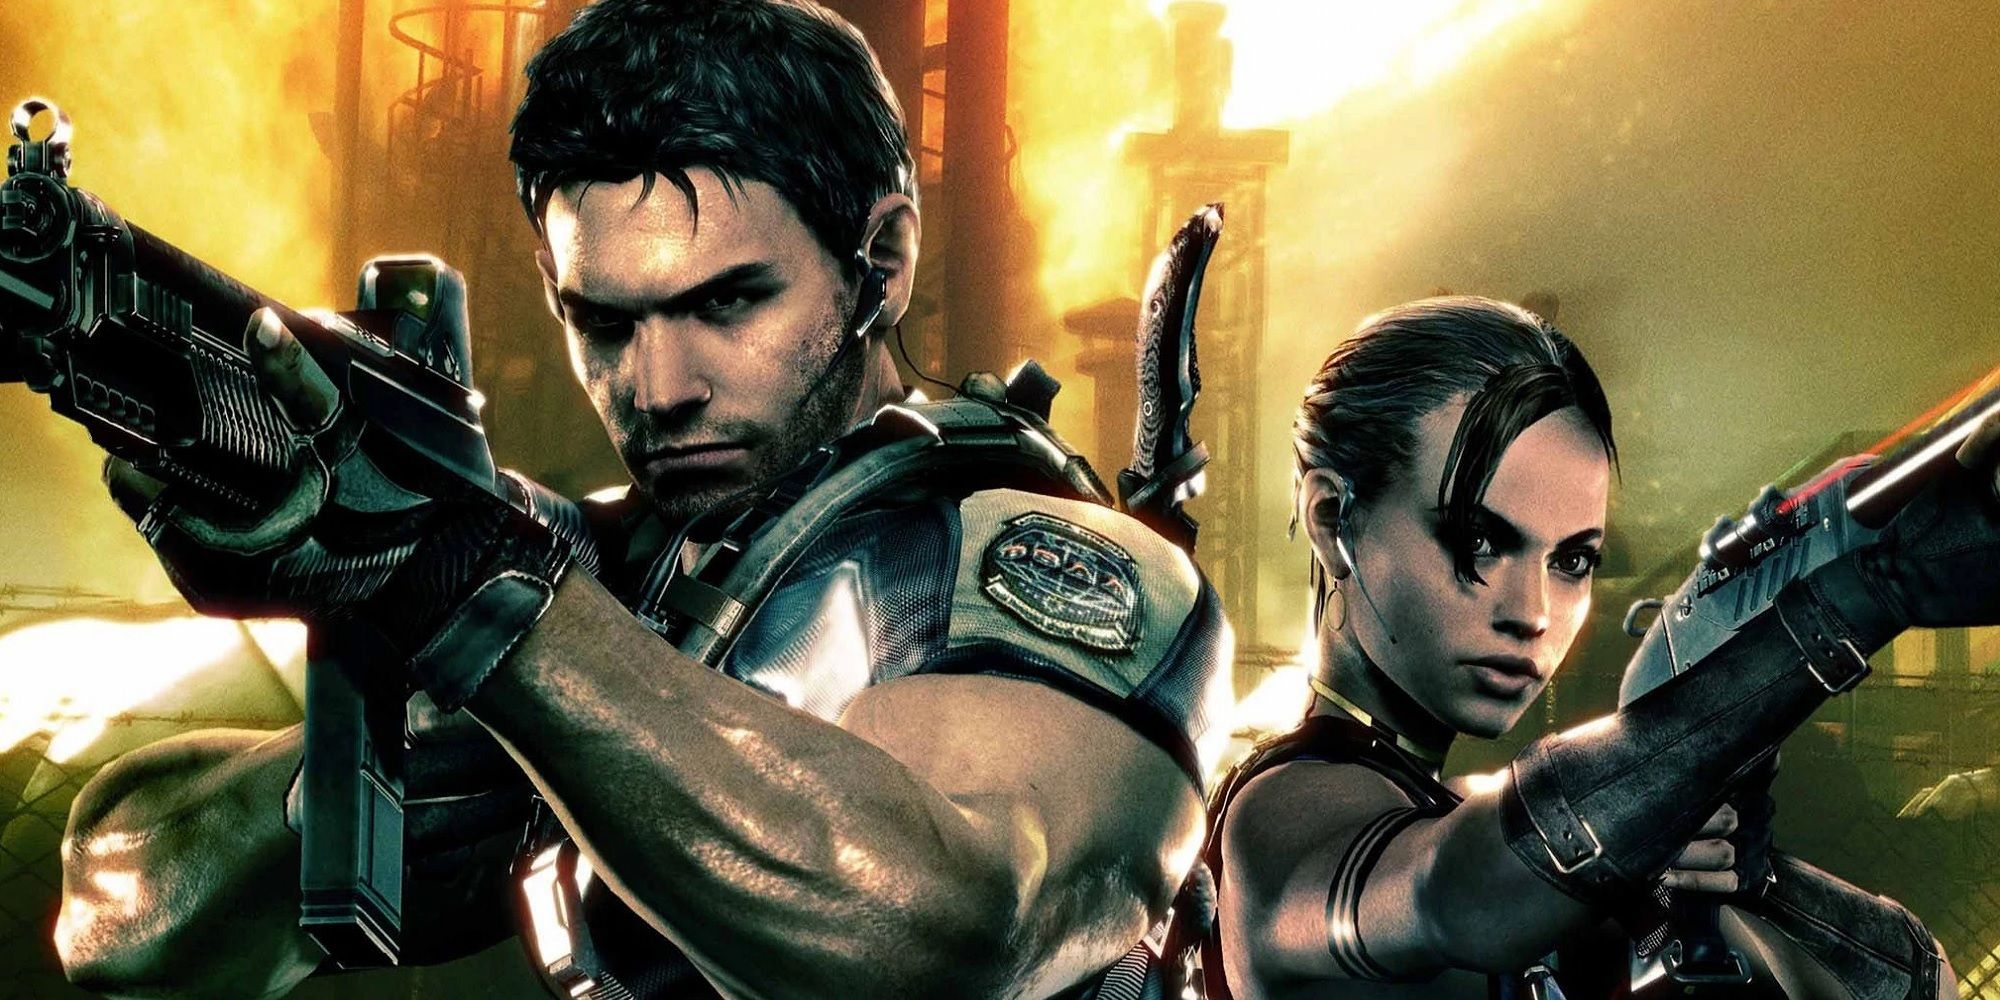 Chris and Sheva ointing their guns in Resident Evil 5.